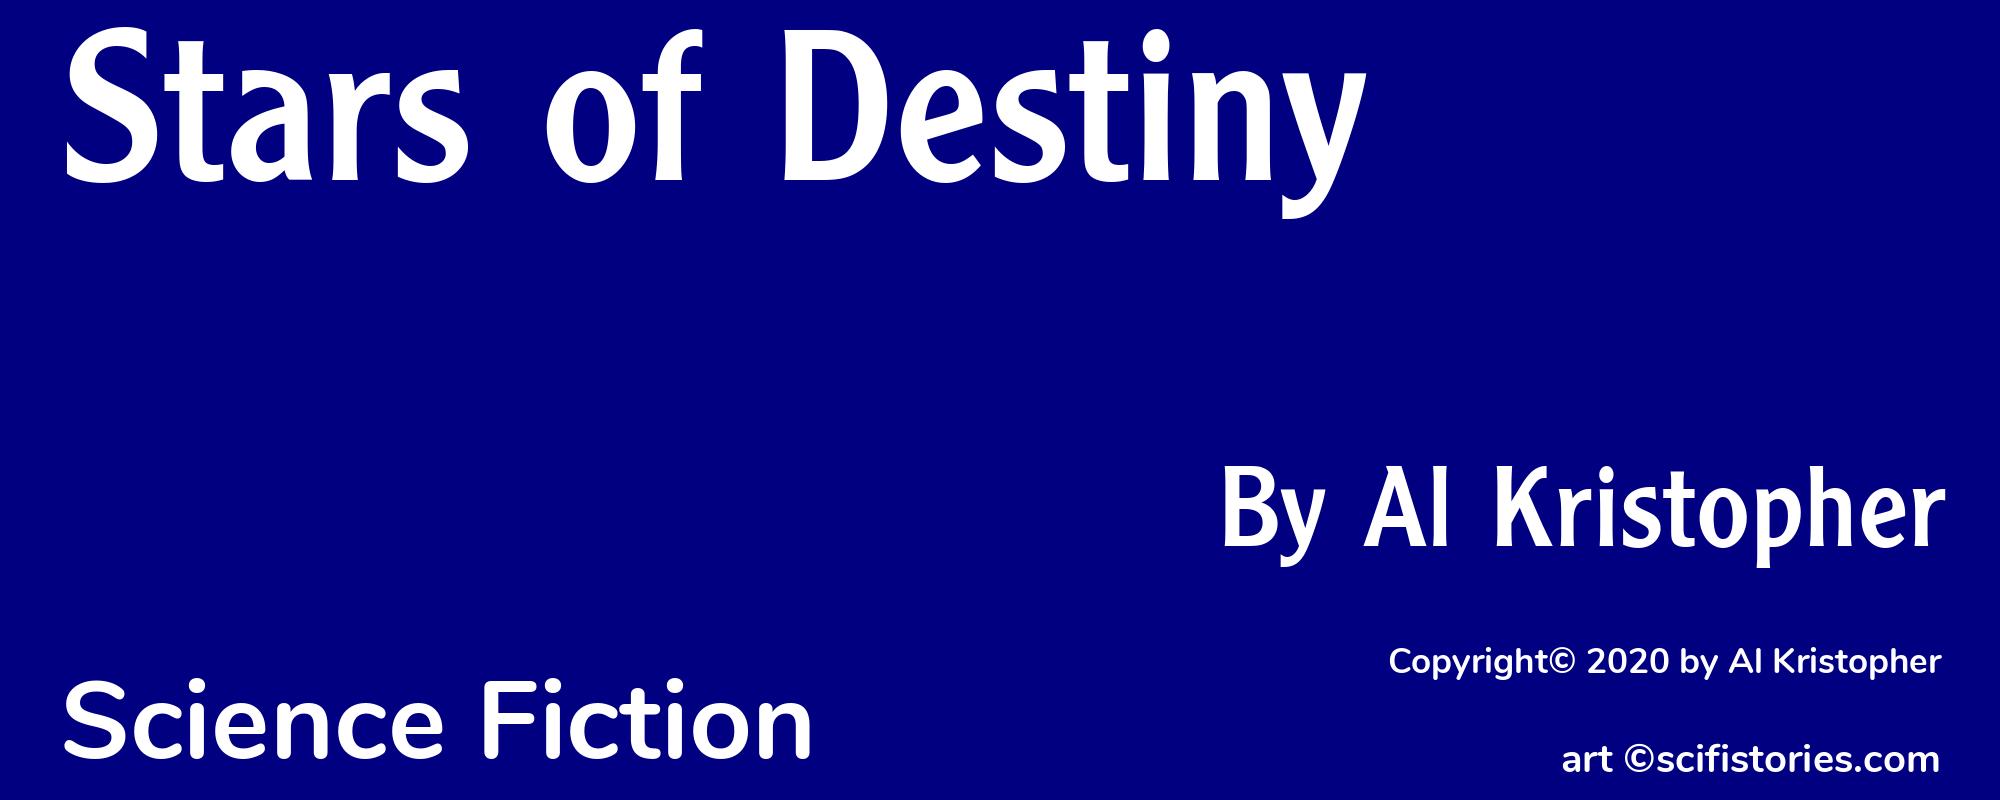 Stars of Destiny - Cover